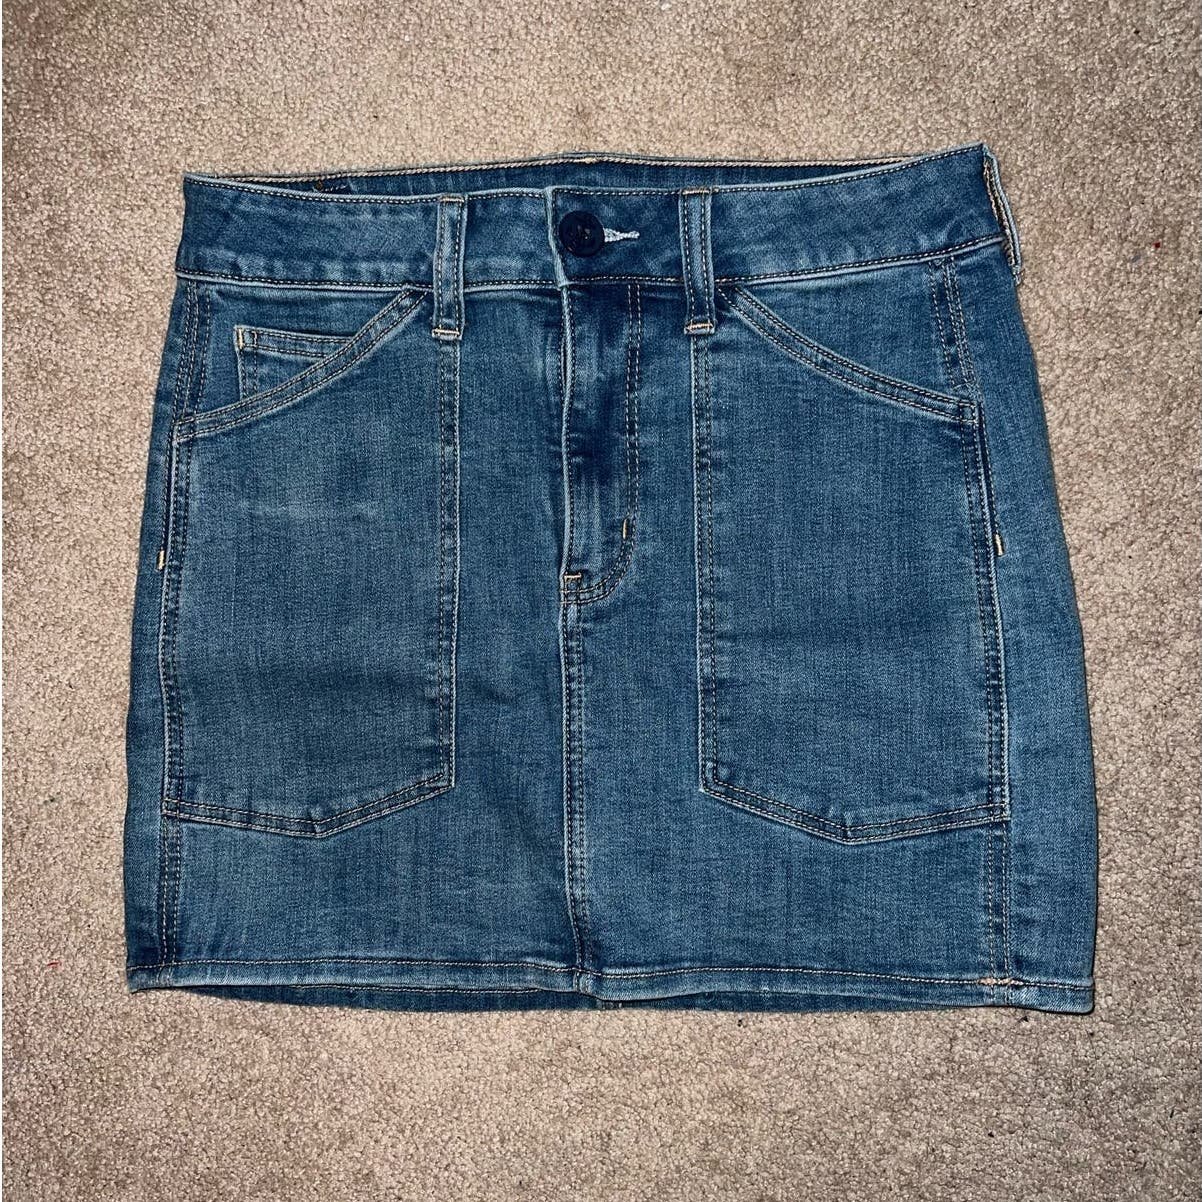 Simple American Eagle Womens Hi-Rise Mini Jean Skirt size 6 HBdagAgjs Low Price